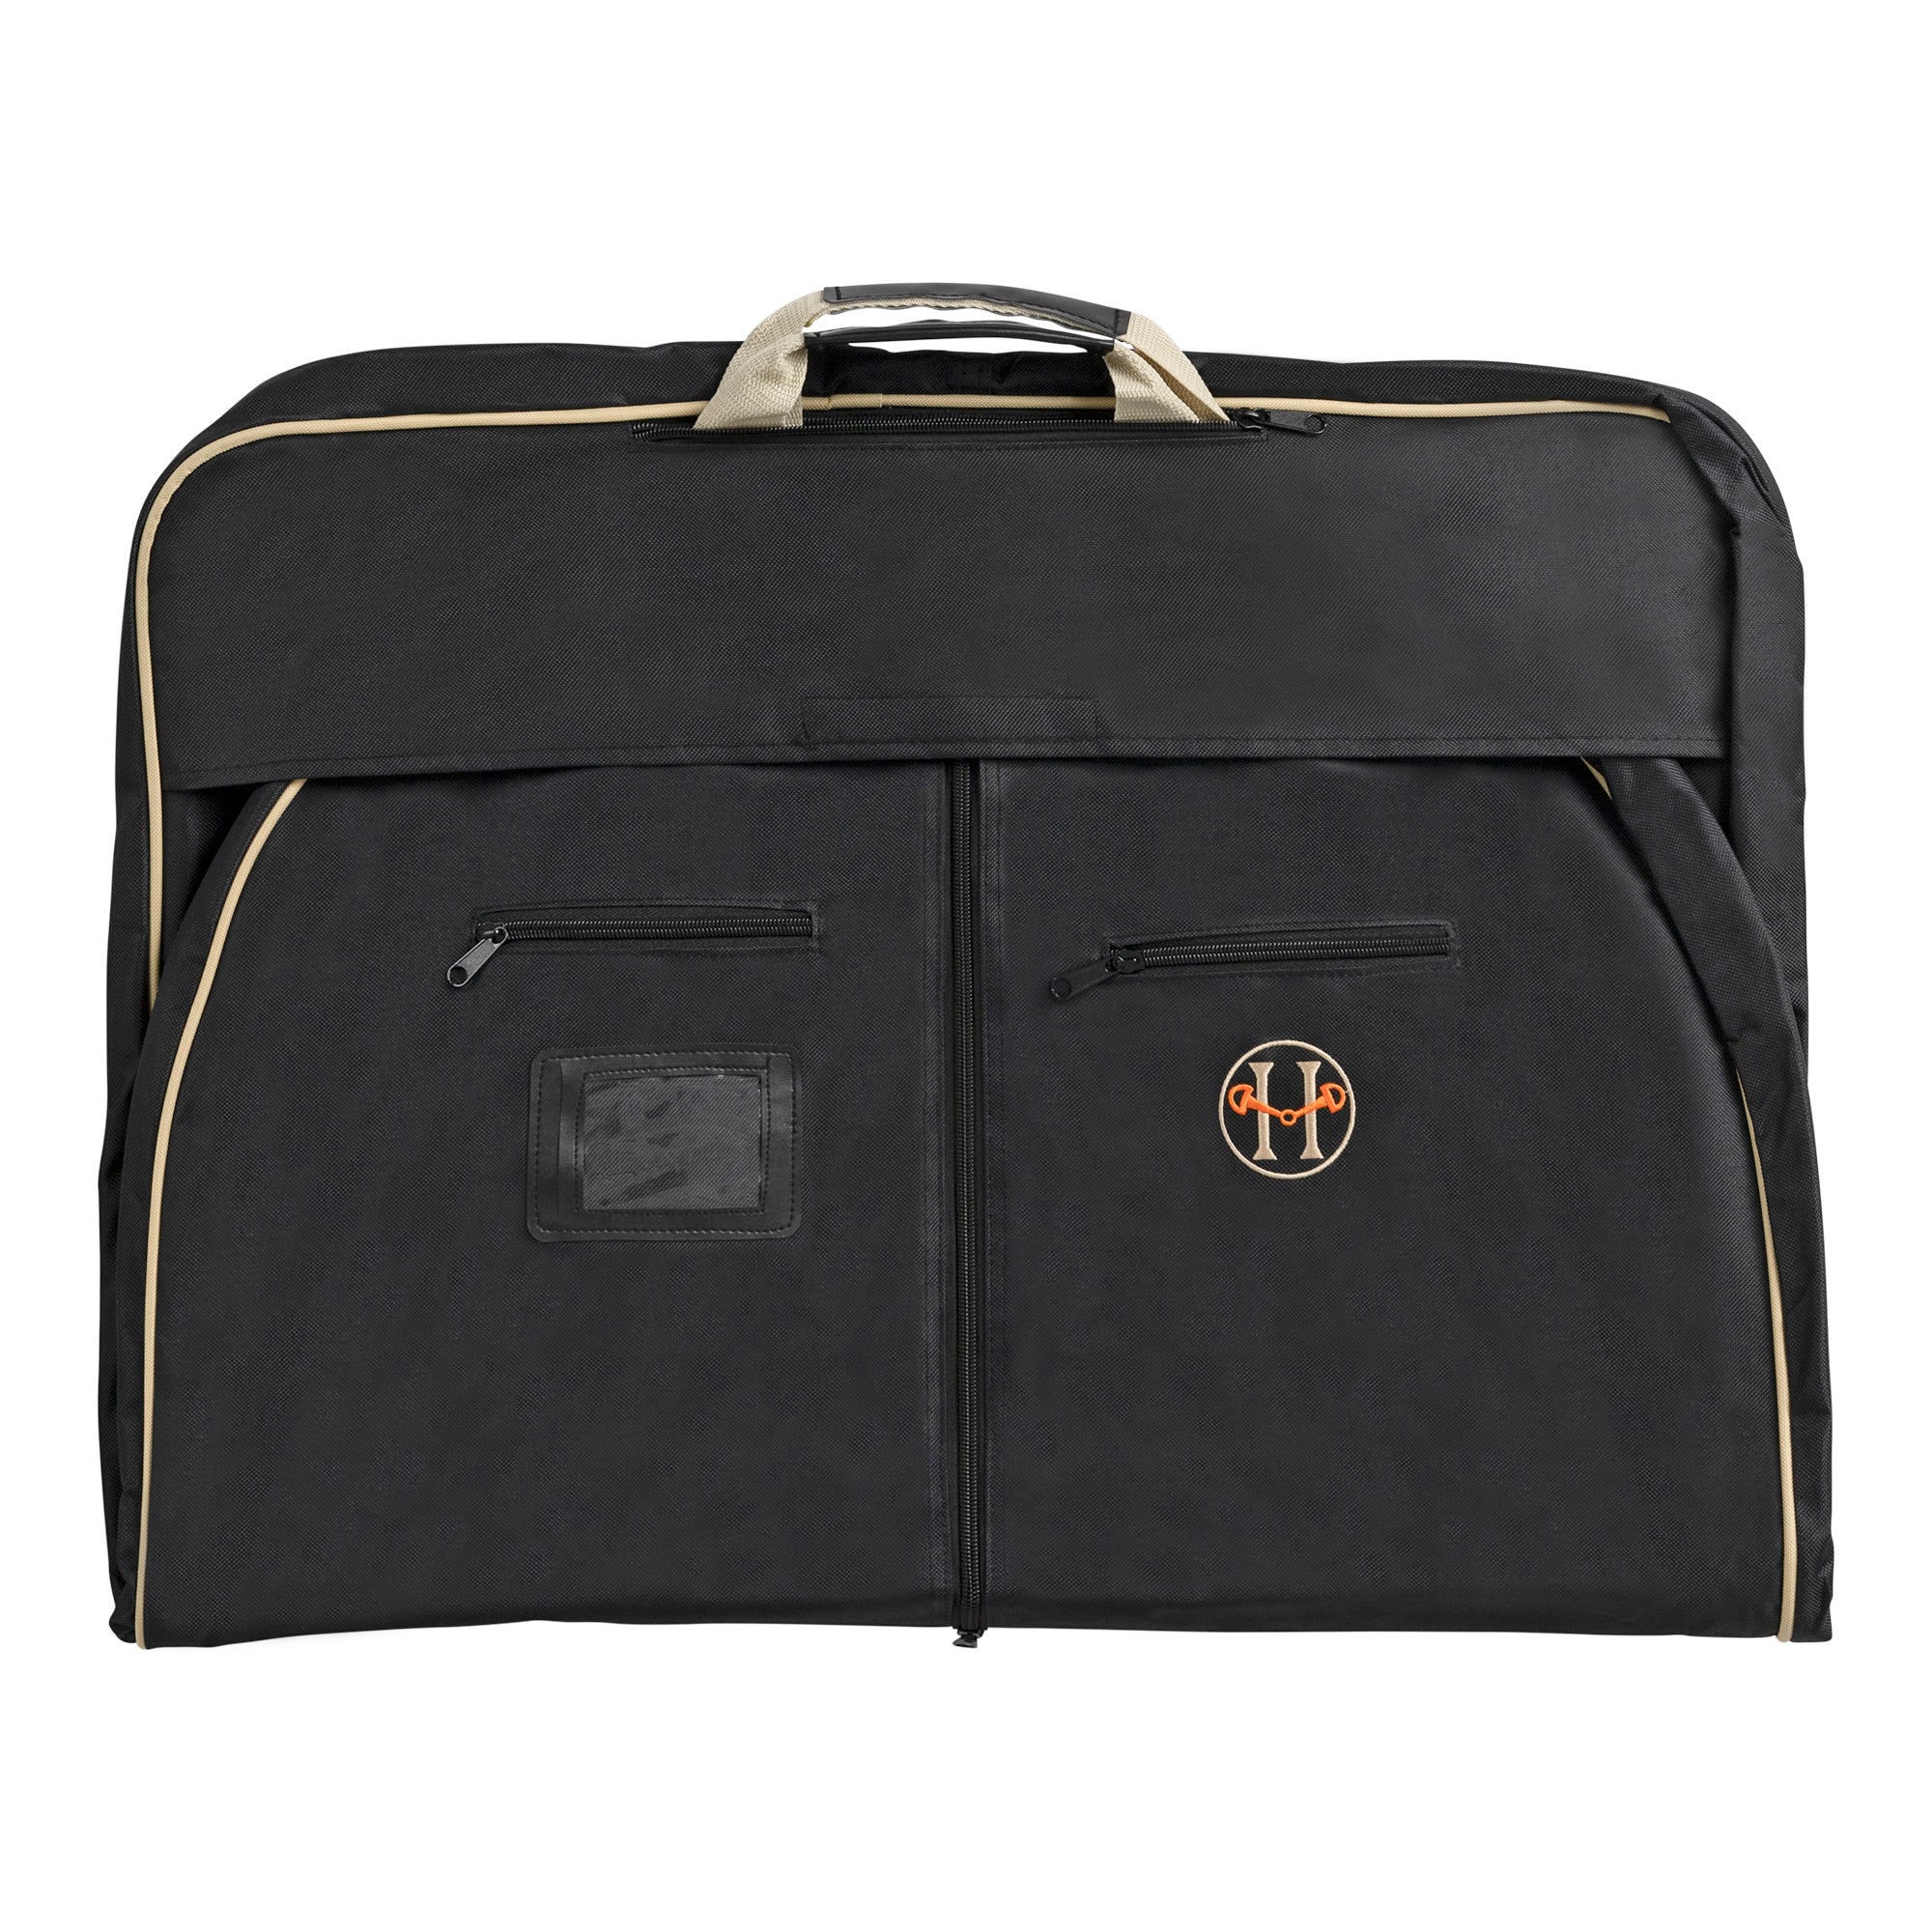 R.J. Toomey Black, 65 Long Vestment/Garment Travel Bag - AngelDirect